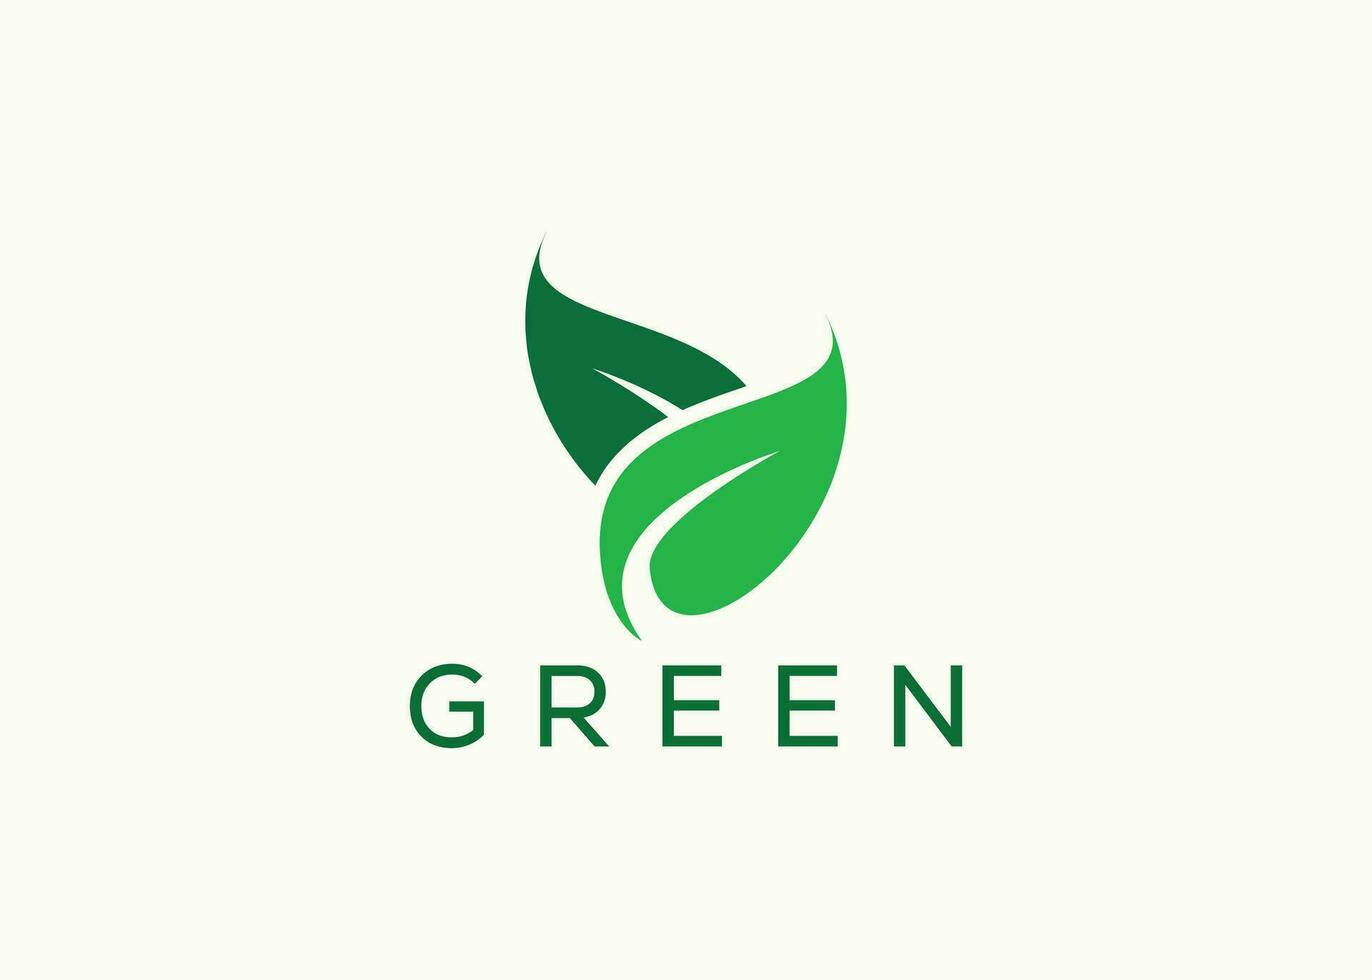 Green leaf logo design vector template. Nature Growth Leaf vector logo.